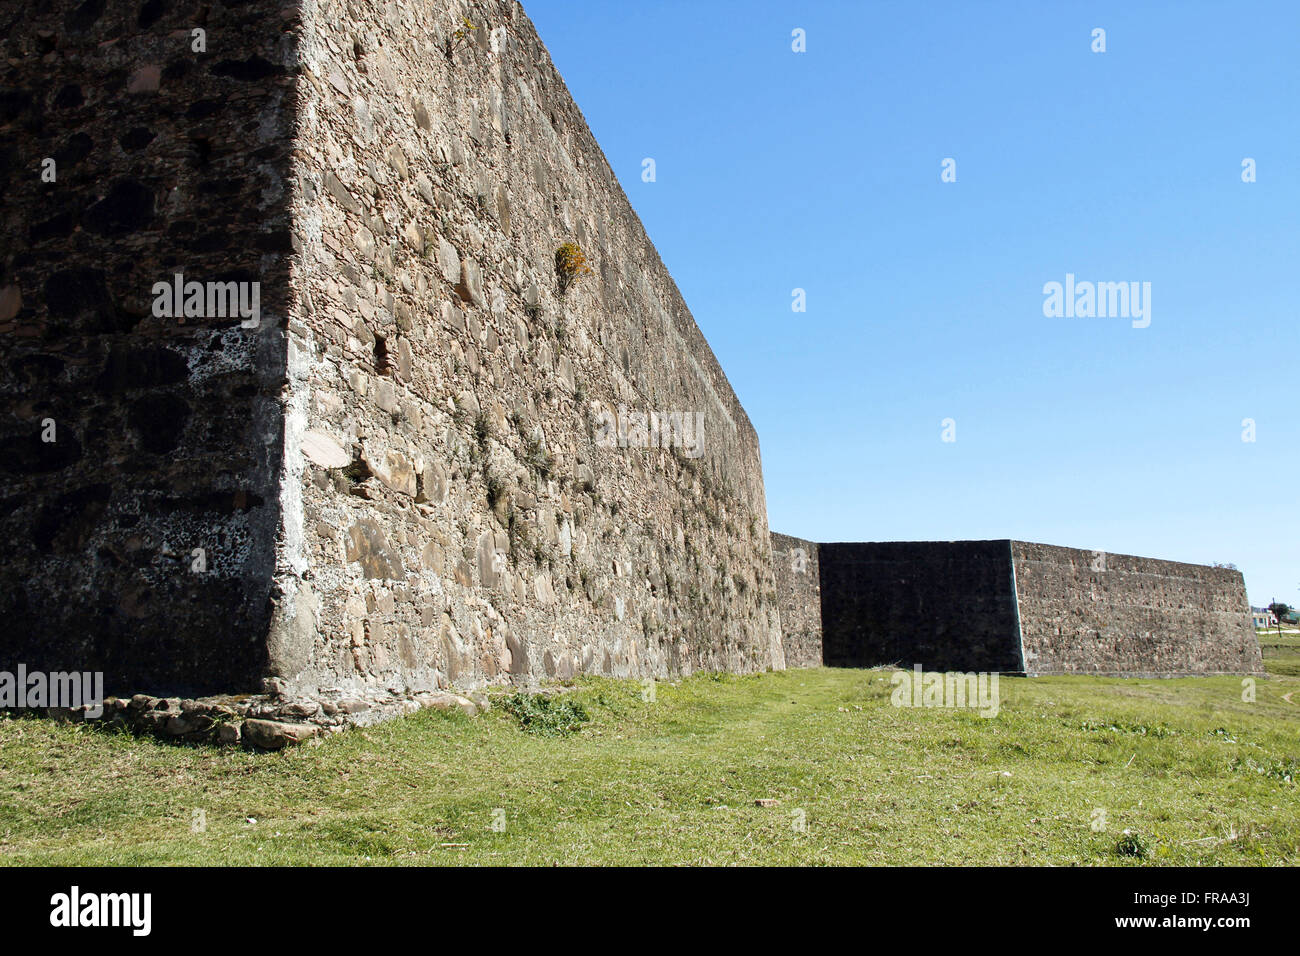 Ruines du Fort Dom Pedro II dans un polygone hexagonal format - construit en 1848 Banque D'Images